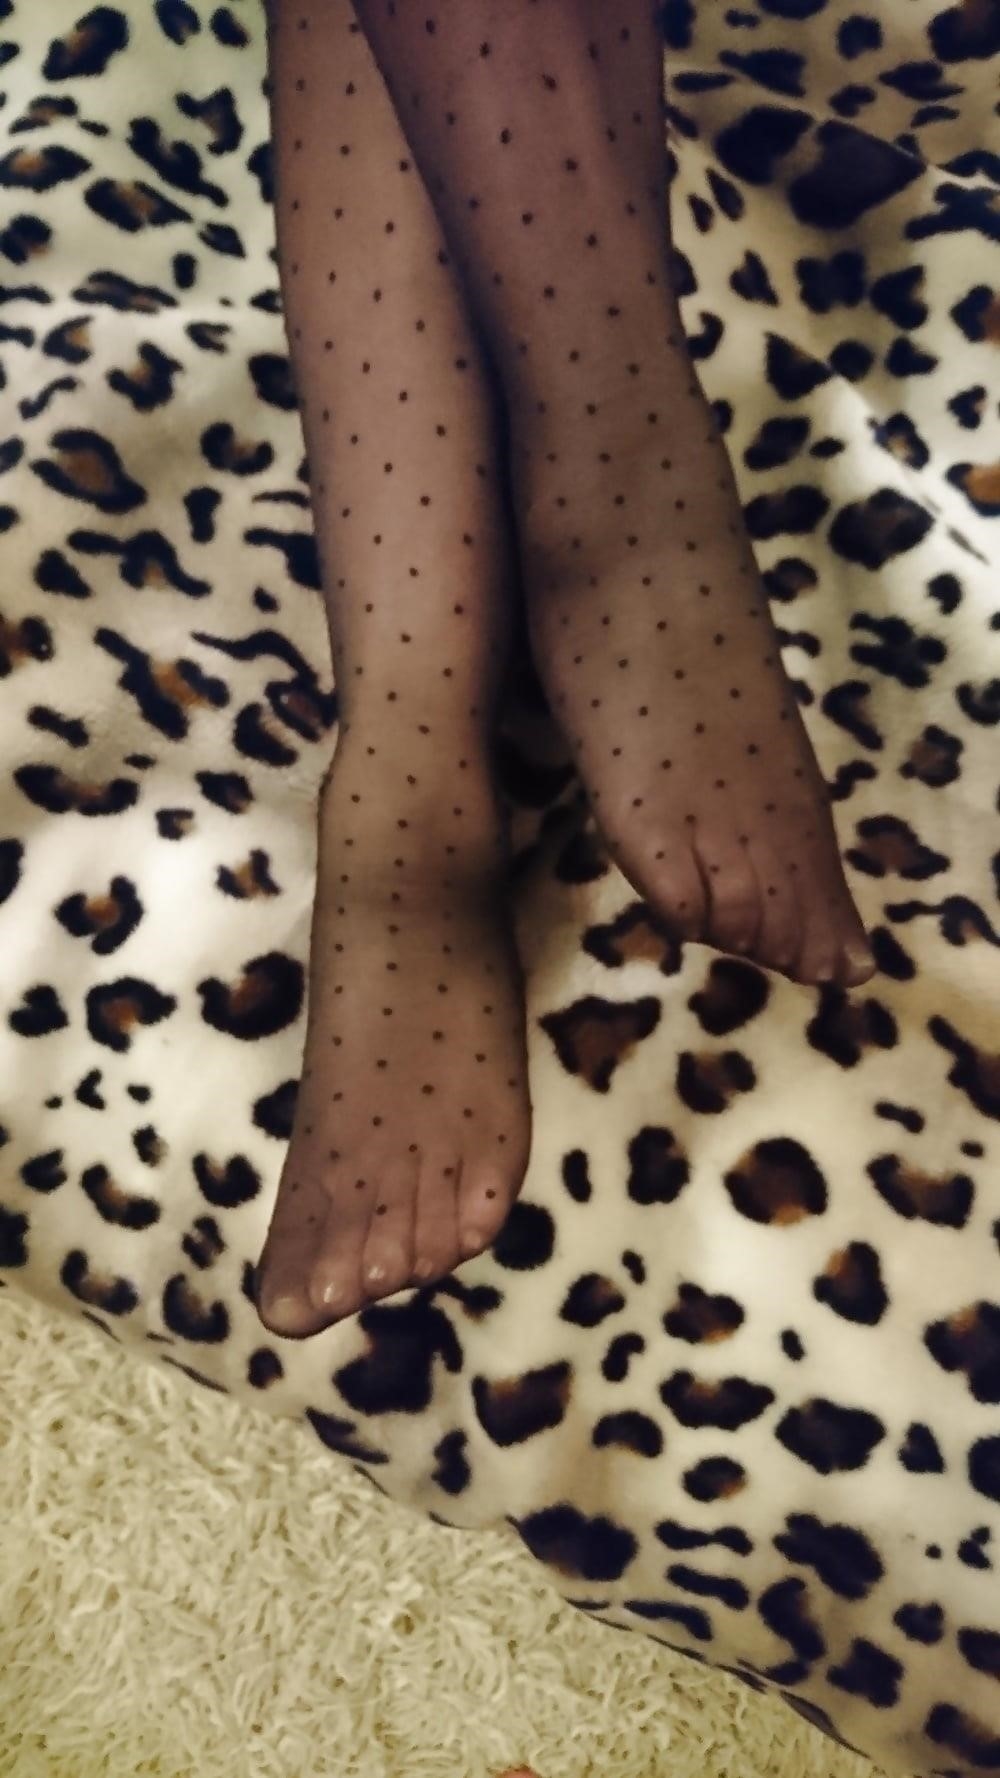 Mature sexy feet-1116